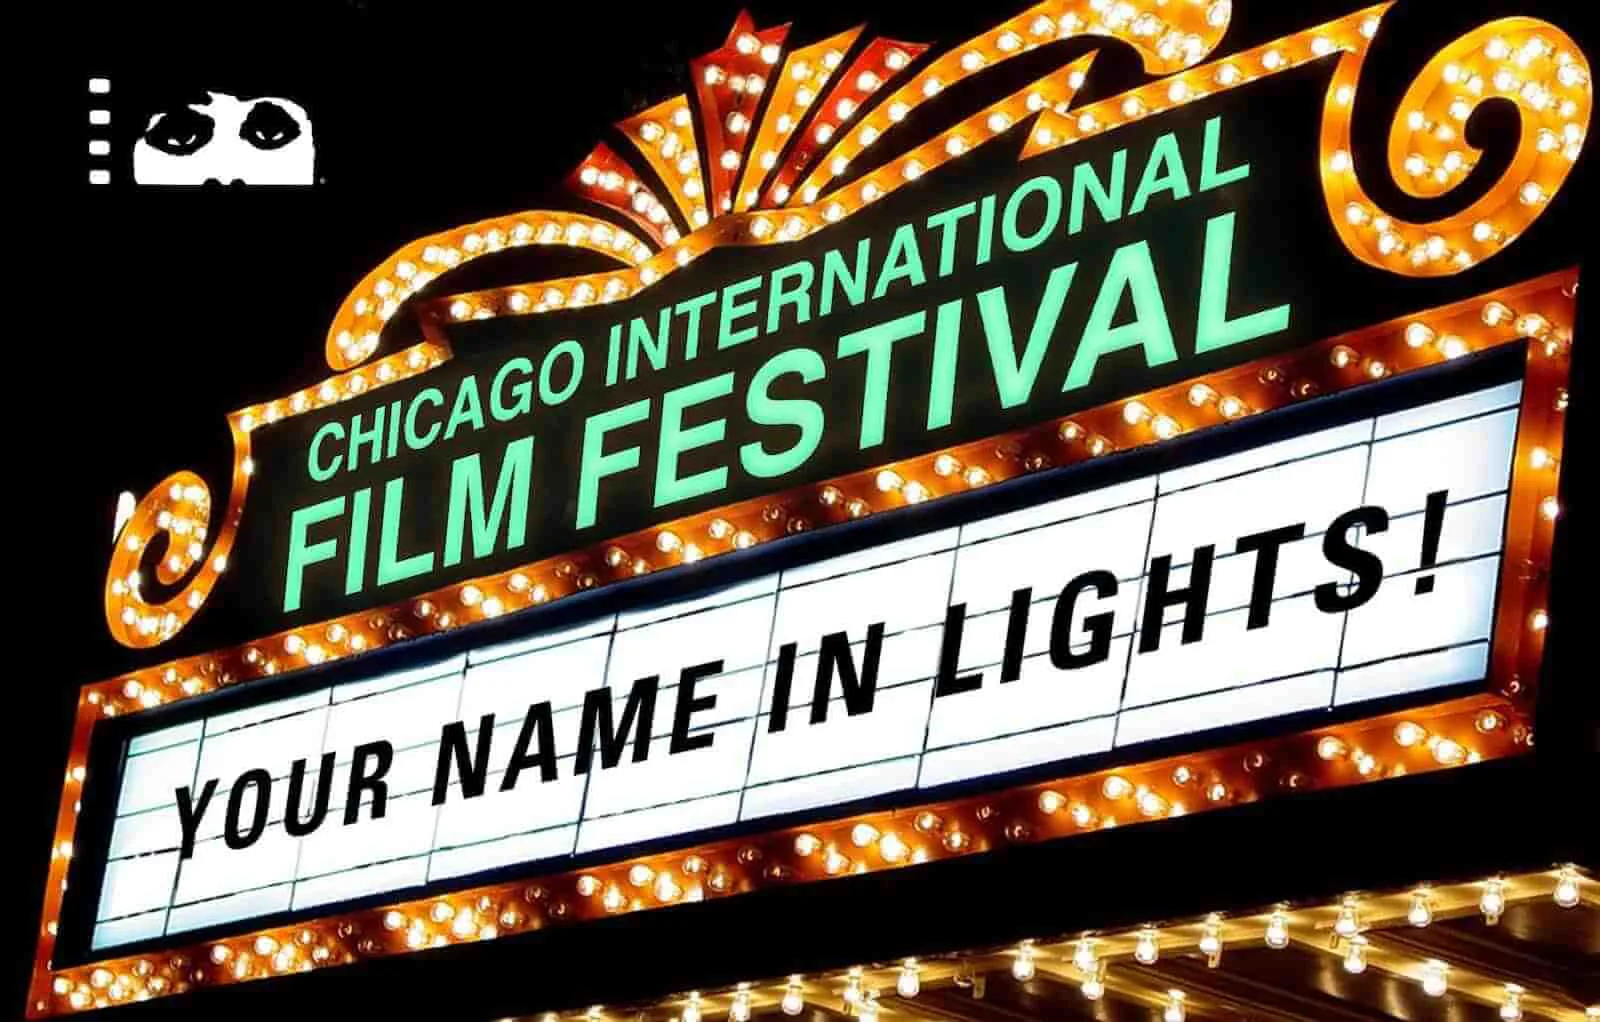 Best Film Festivals - Chicago Film Festivals